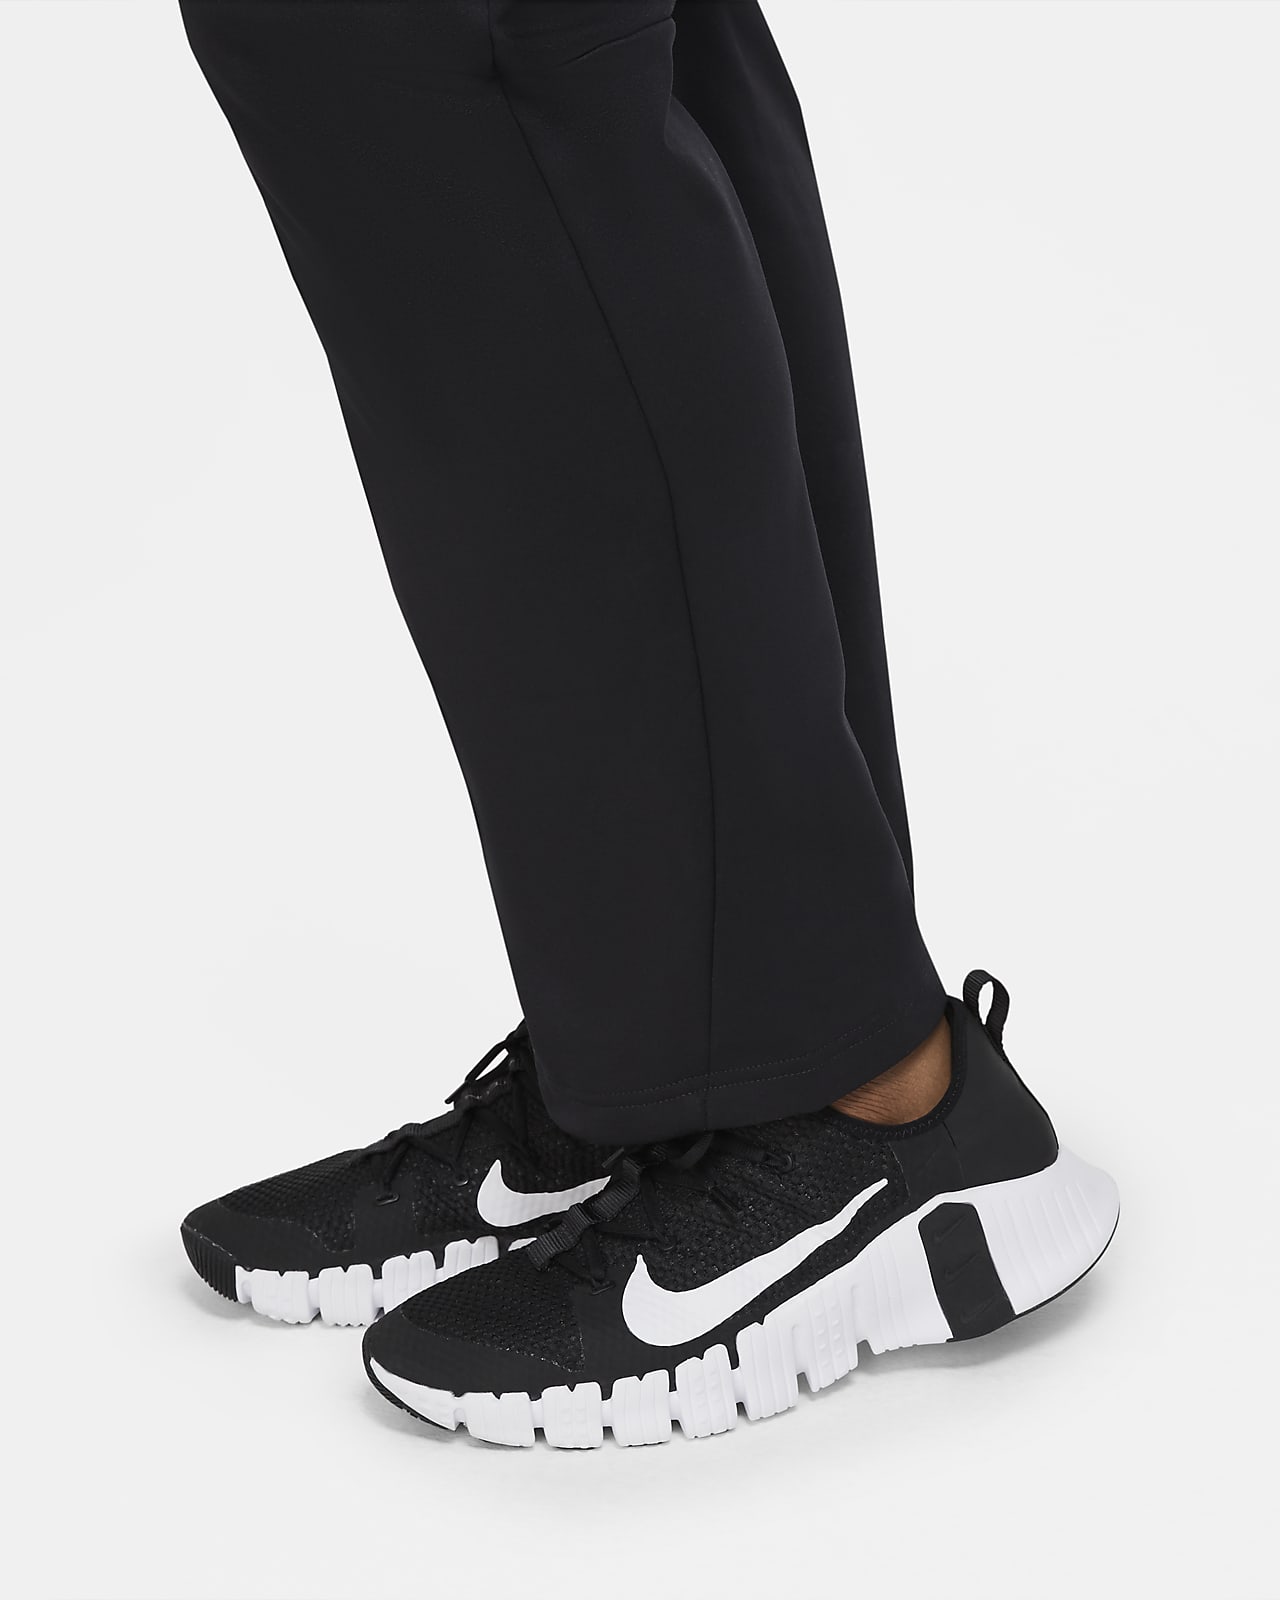 Nike, Pants & Jumpsuits, Nike Training Pants